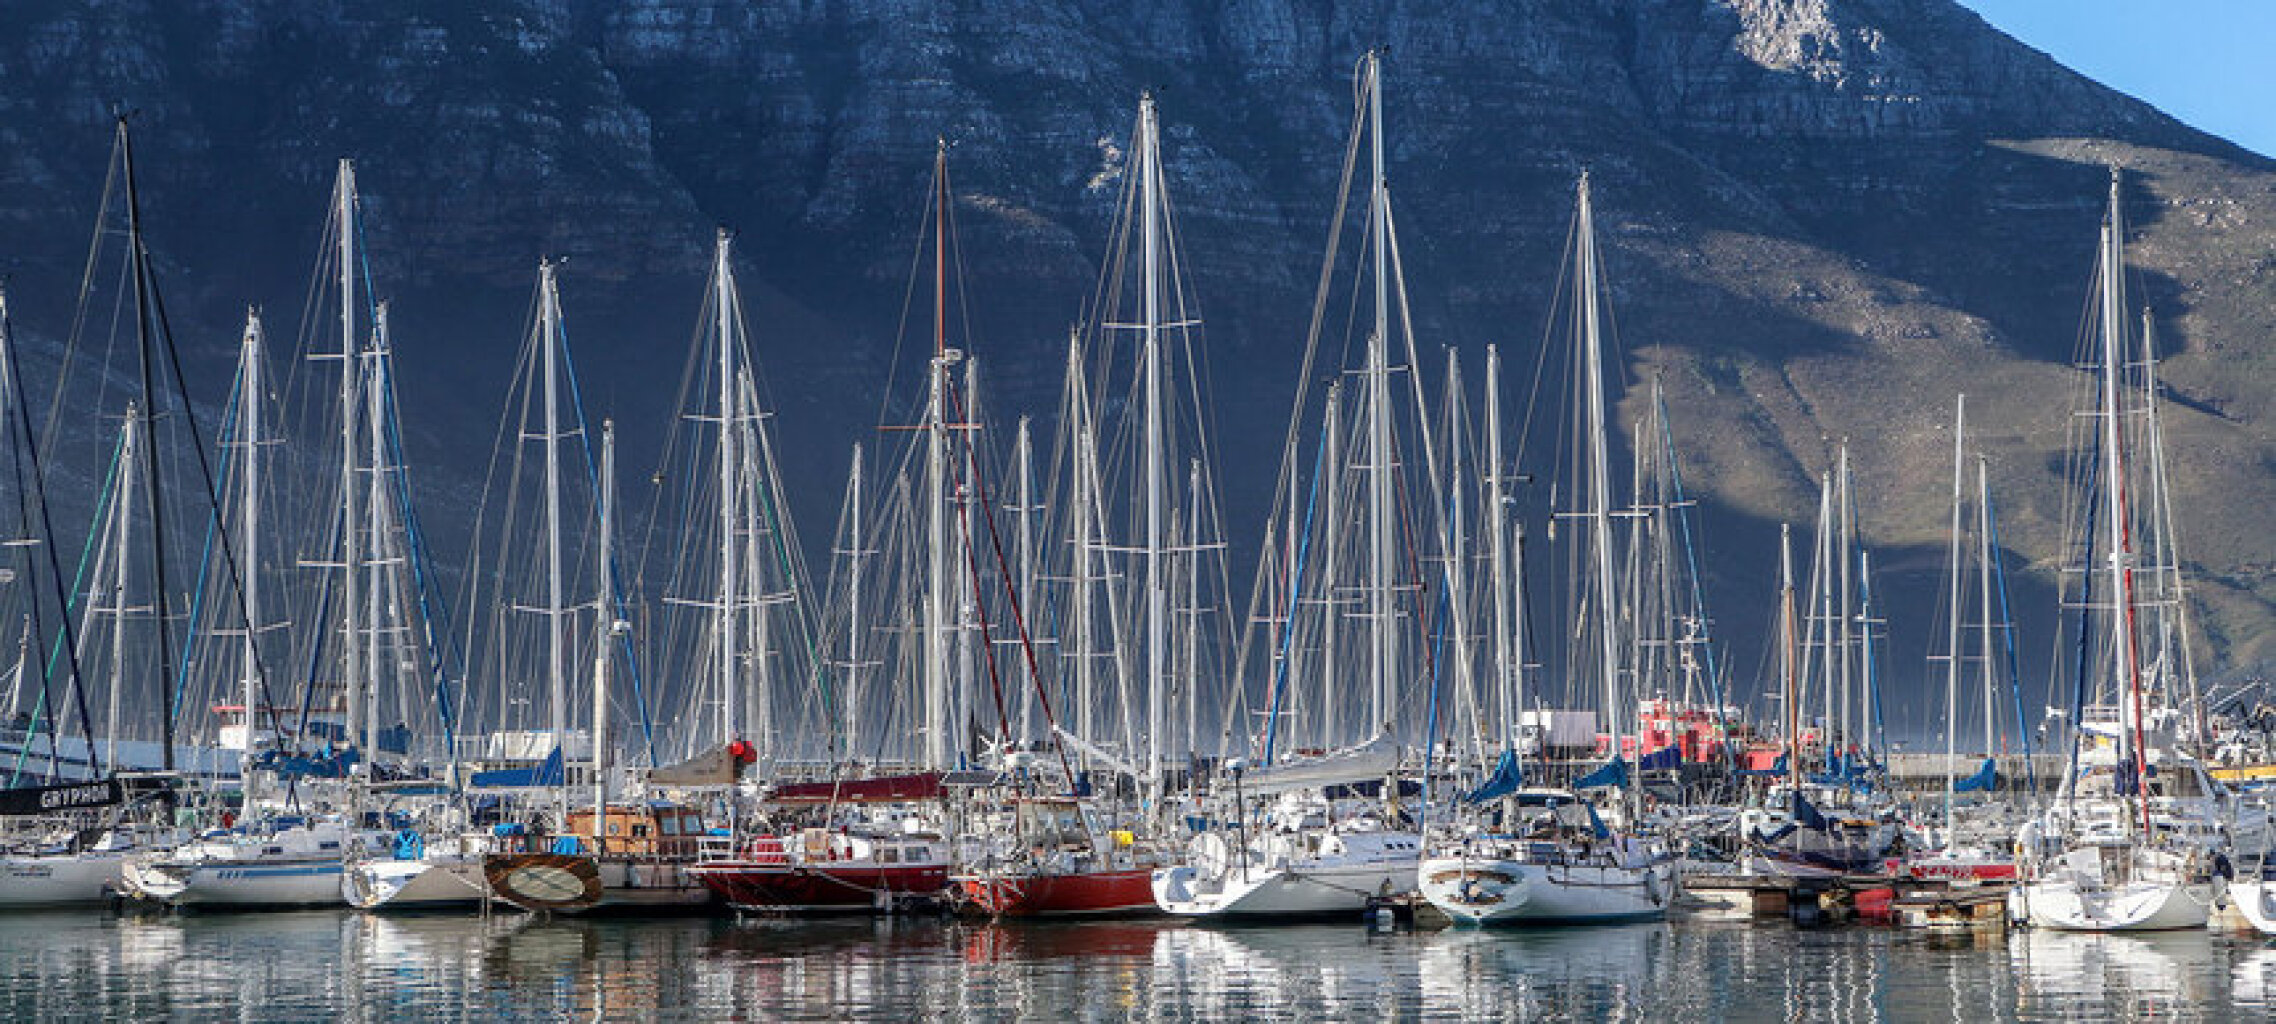 Quadro Barcos Cape Town Pan por Marcelo Baldin & Sâmia Munaretti -  CATEGORIAS